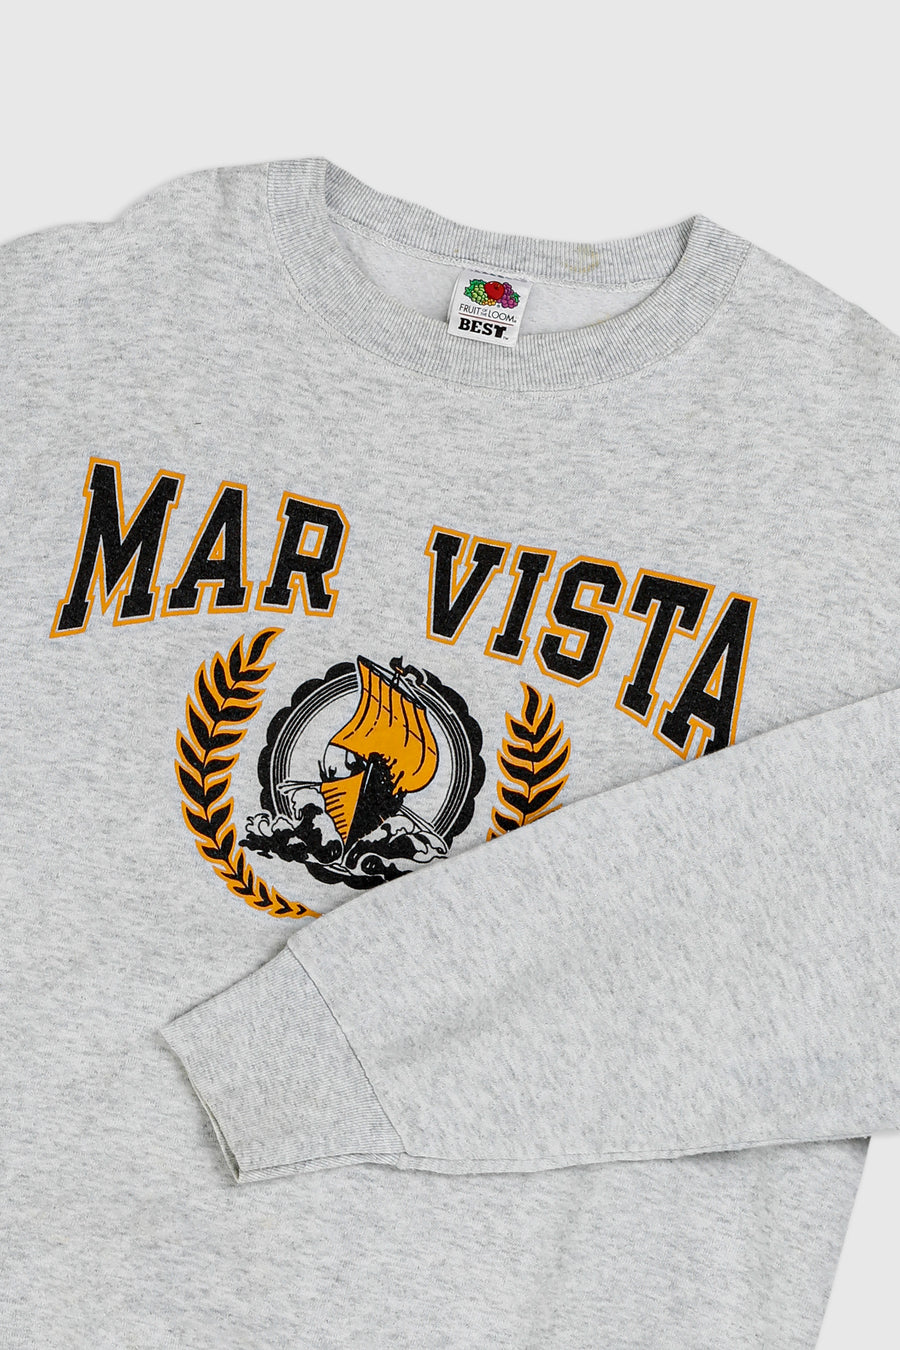 Vintage Mar Vista Sweatshirt - M